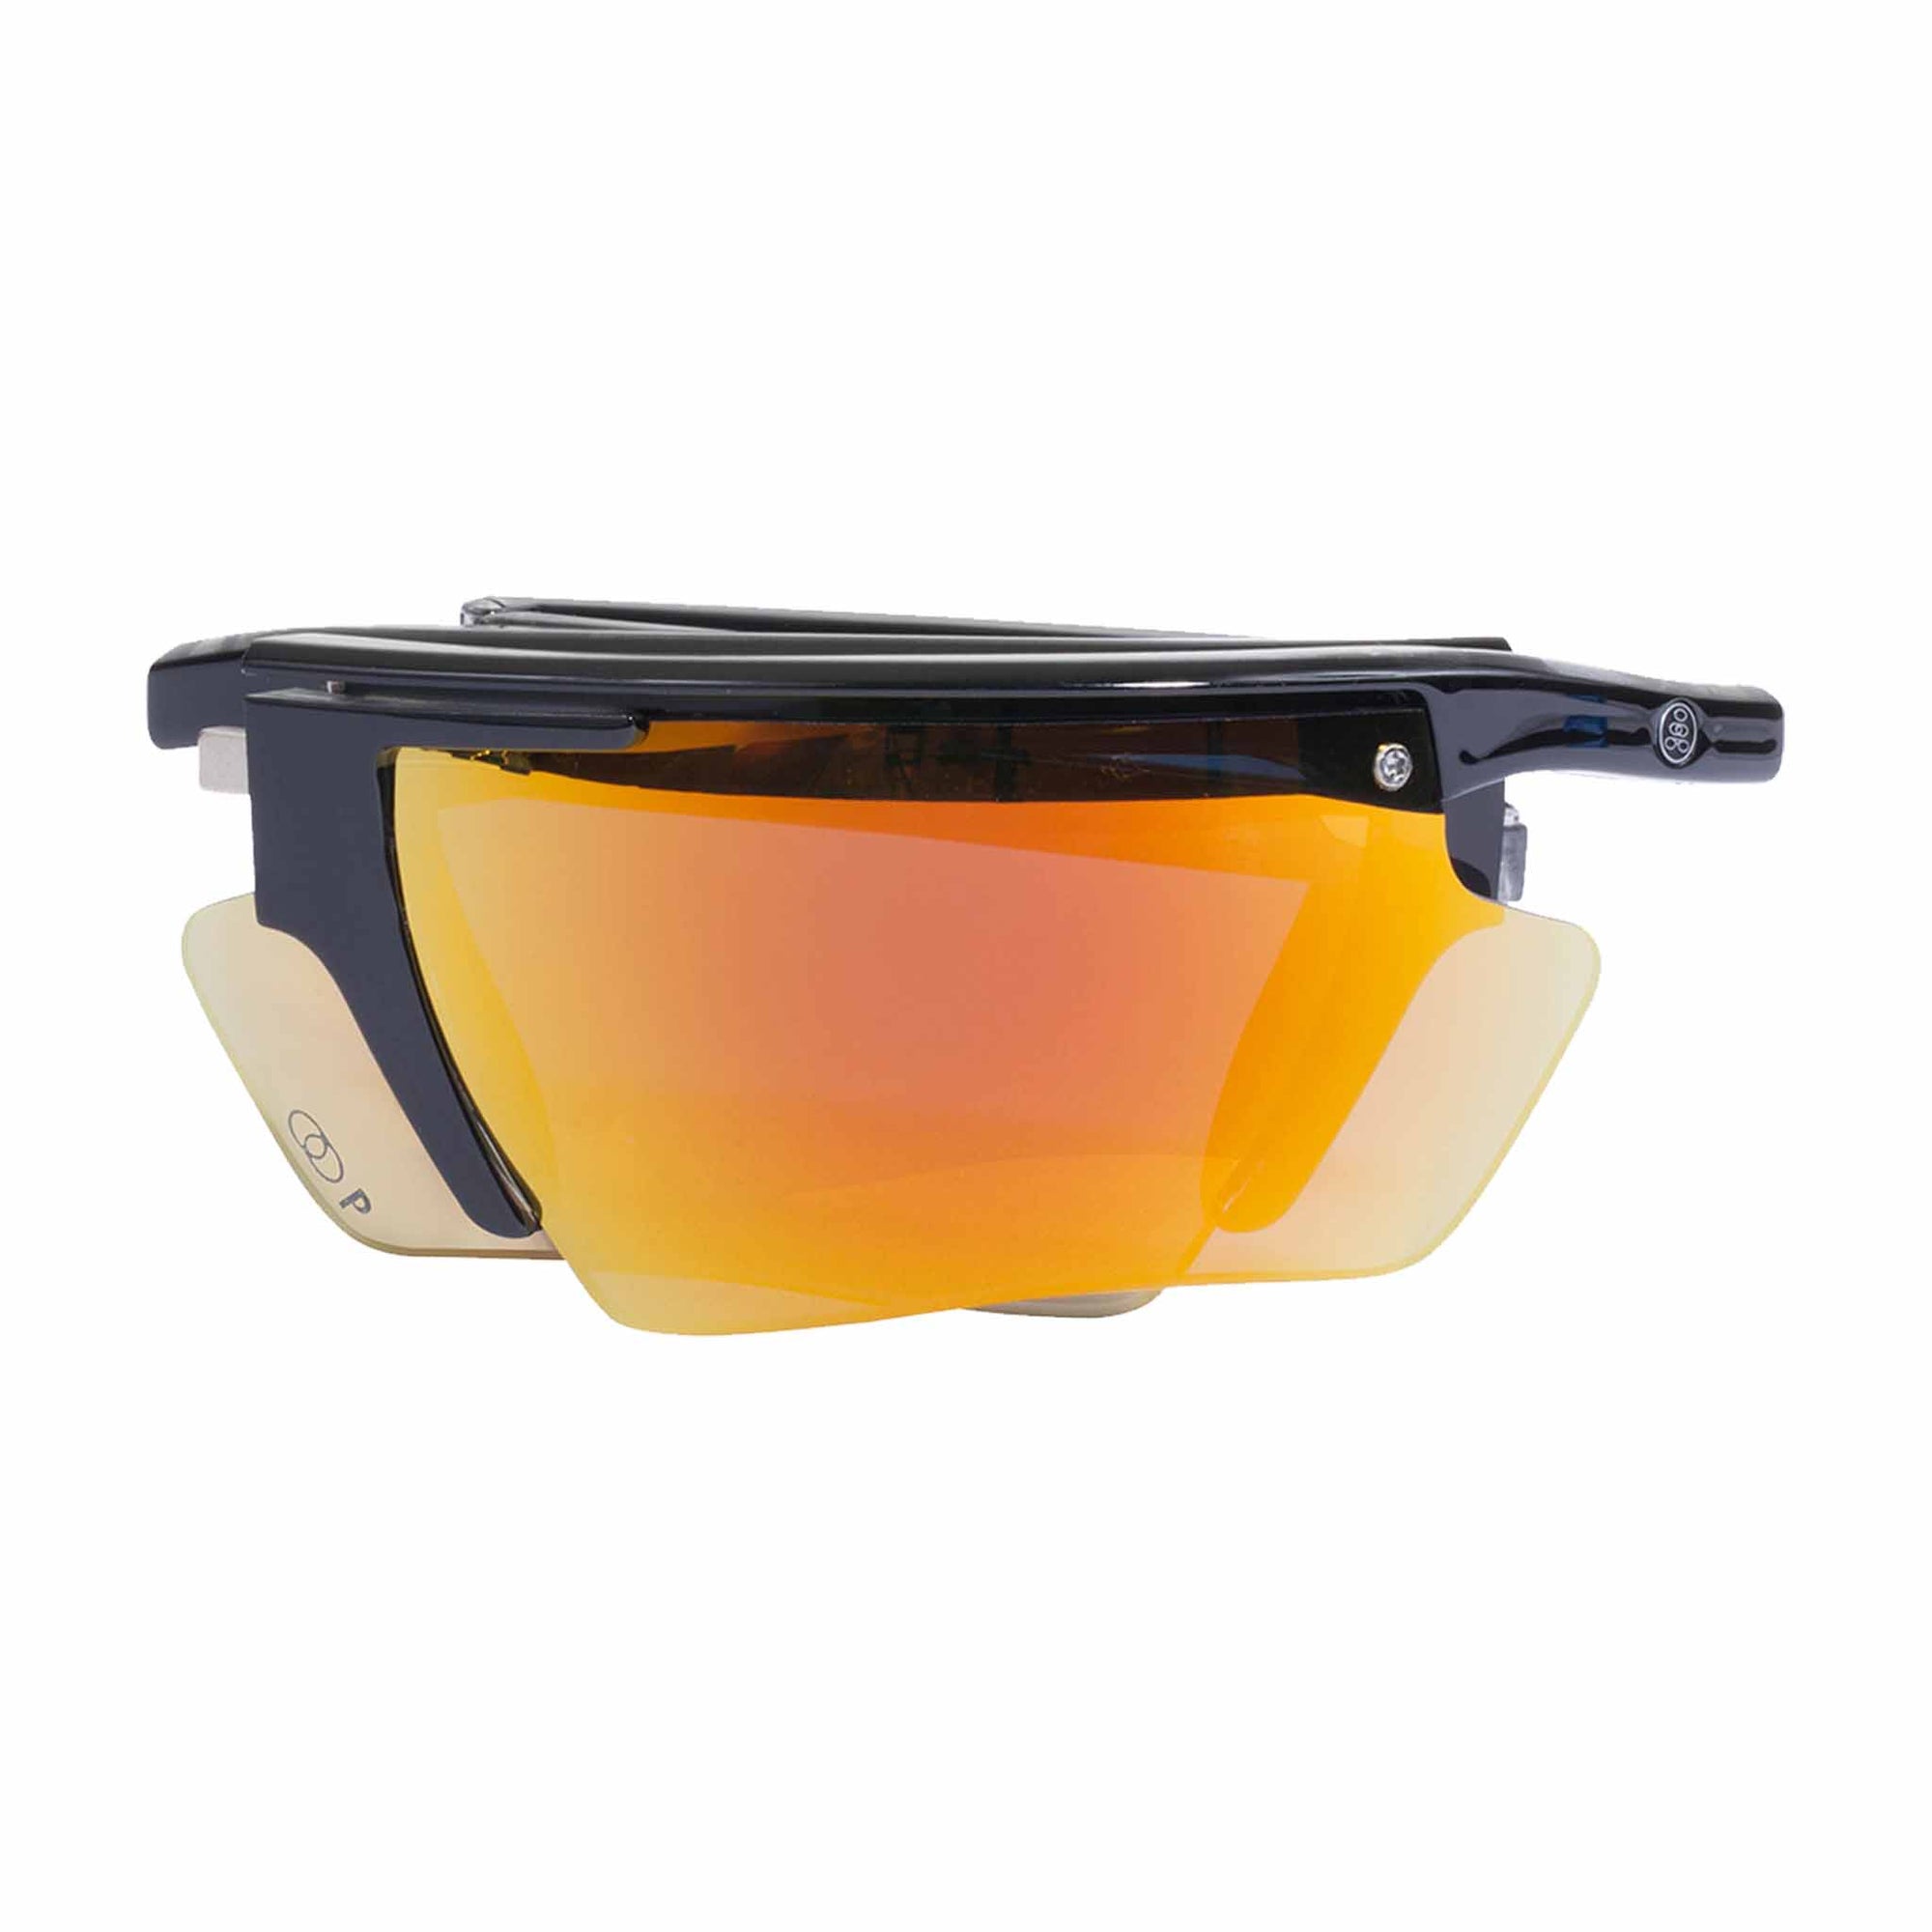 Popticals, Premium Compact Sunglasses, PopEdge, 040091-BLON, Polarized Sunglasses, Gloss Black over Crystal Frame, Gray Lenses with Orange Mirror Finish, Compact View